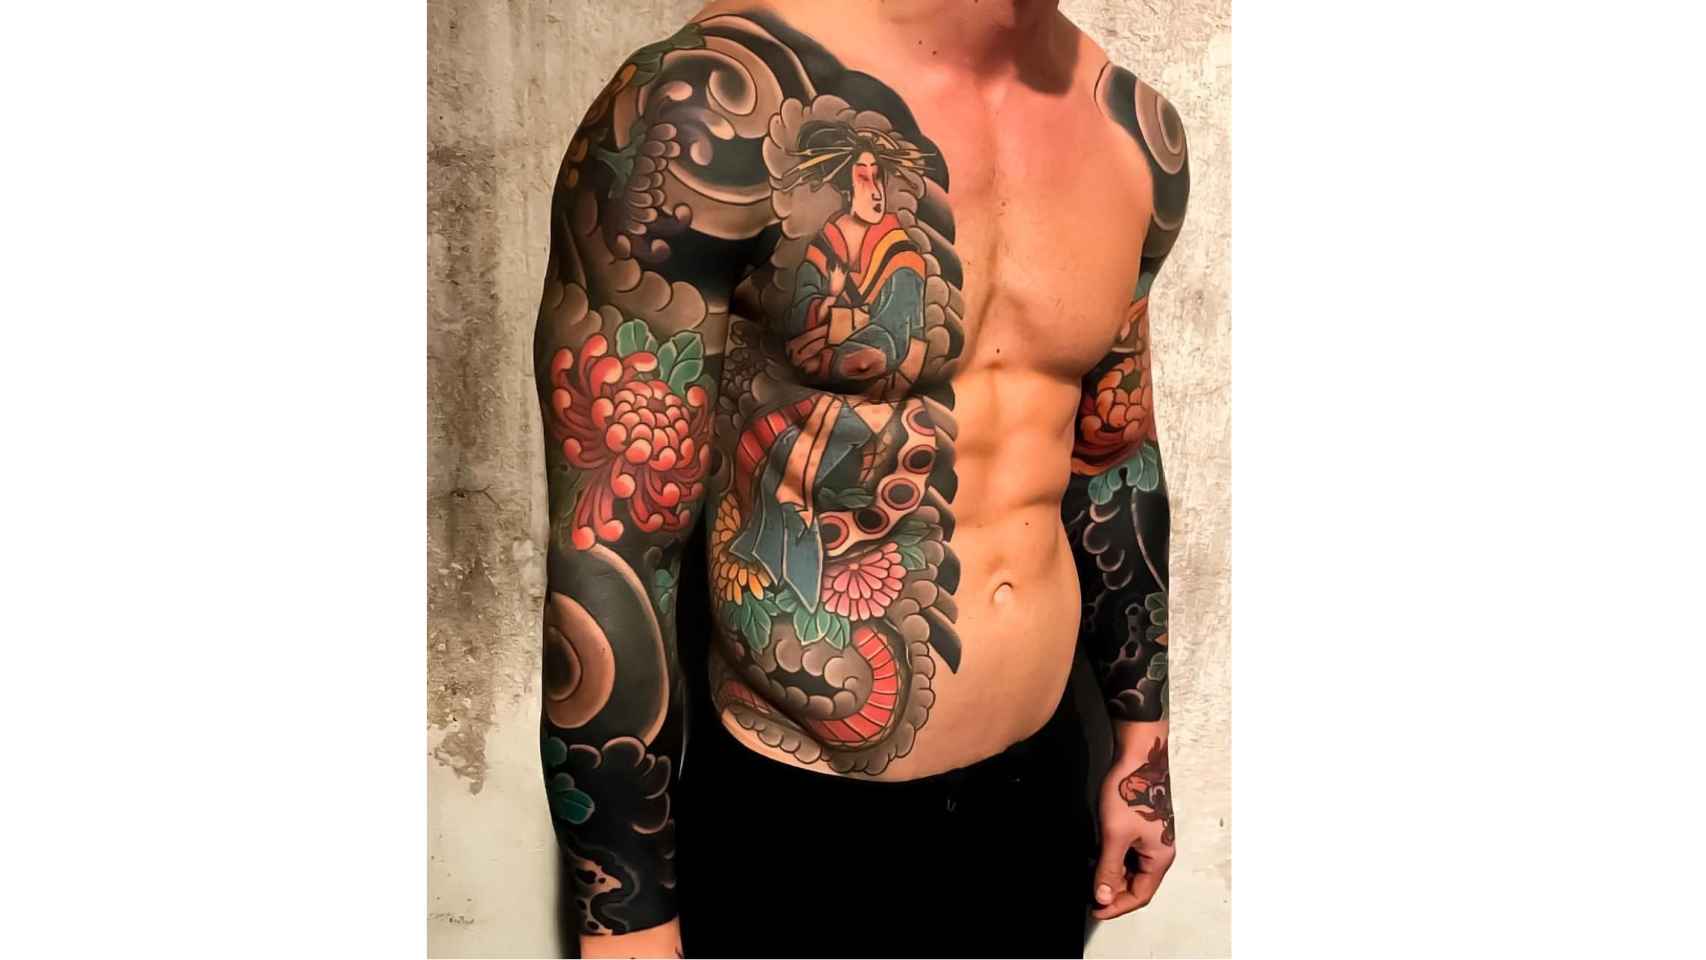 Tatuajes japoneses